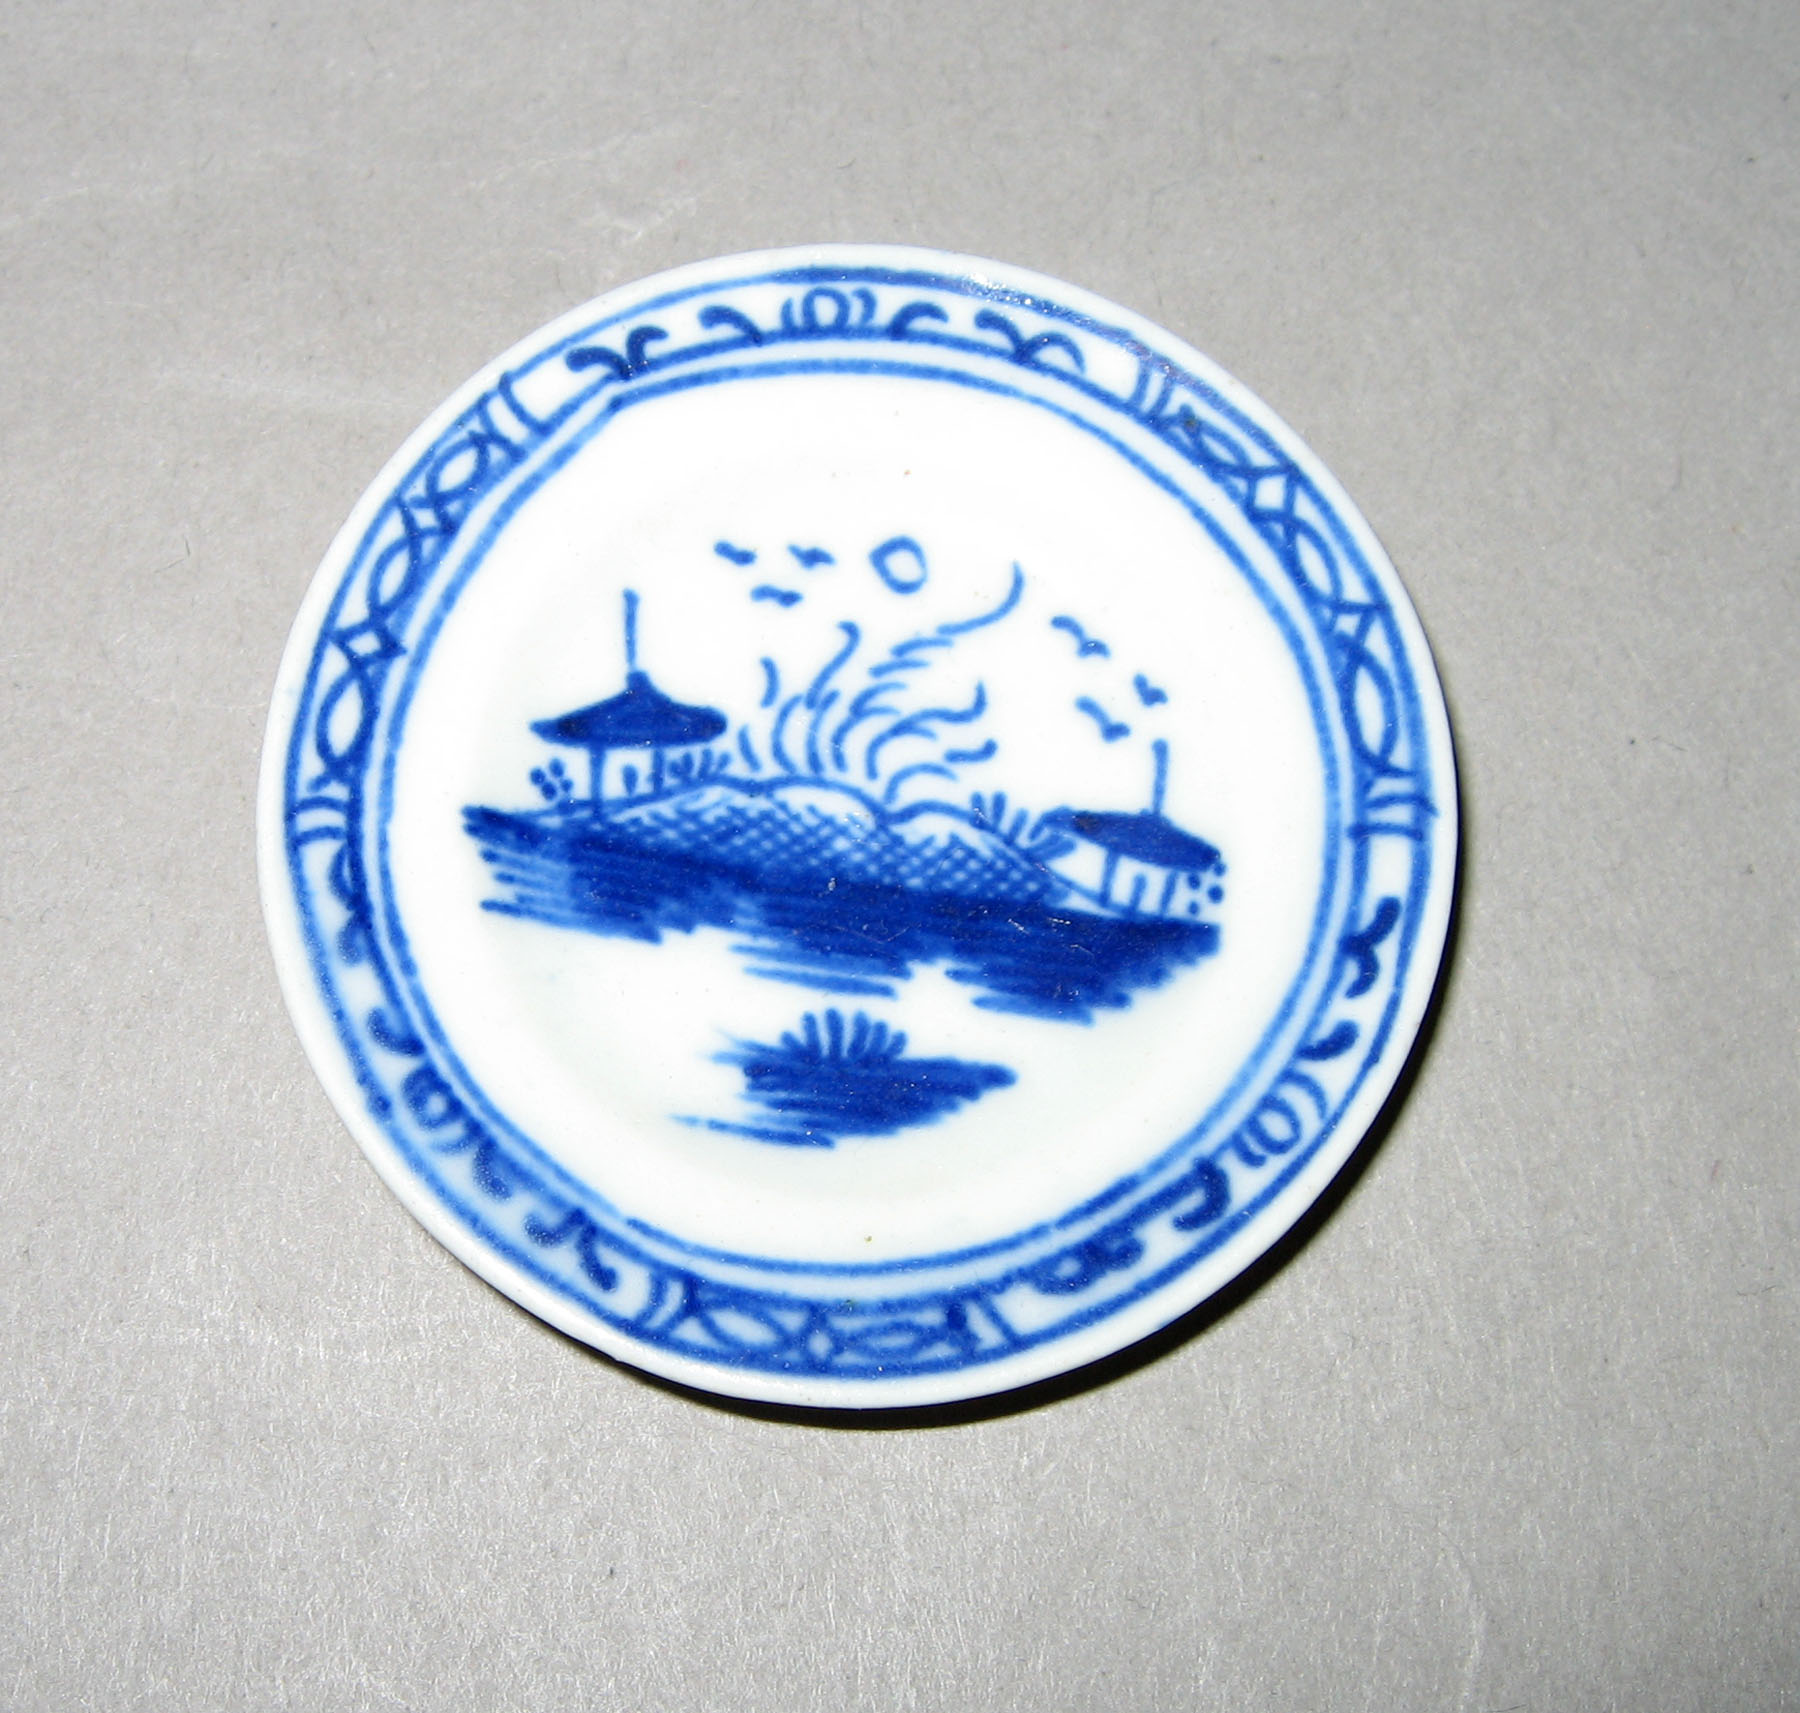 1965.0560.001 Miniature plate